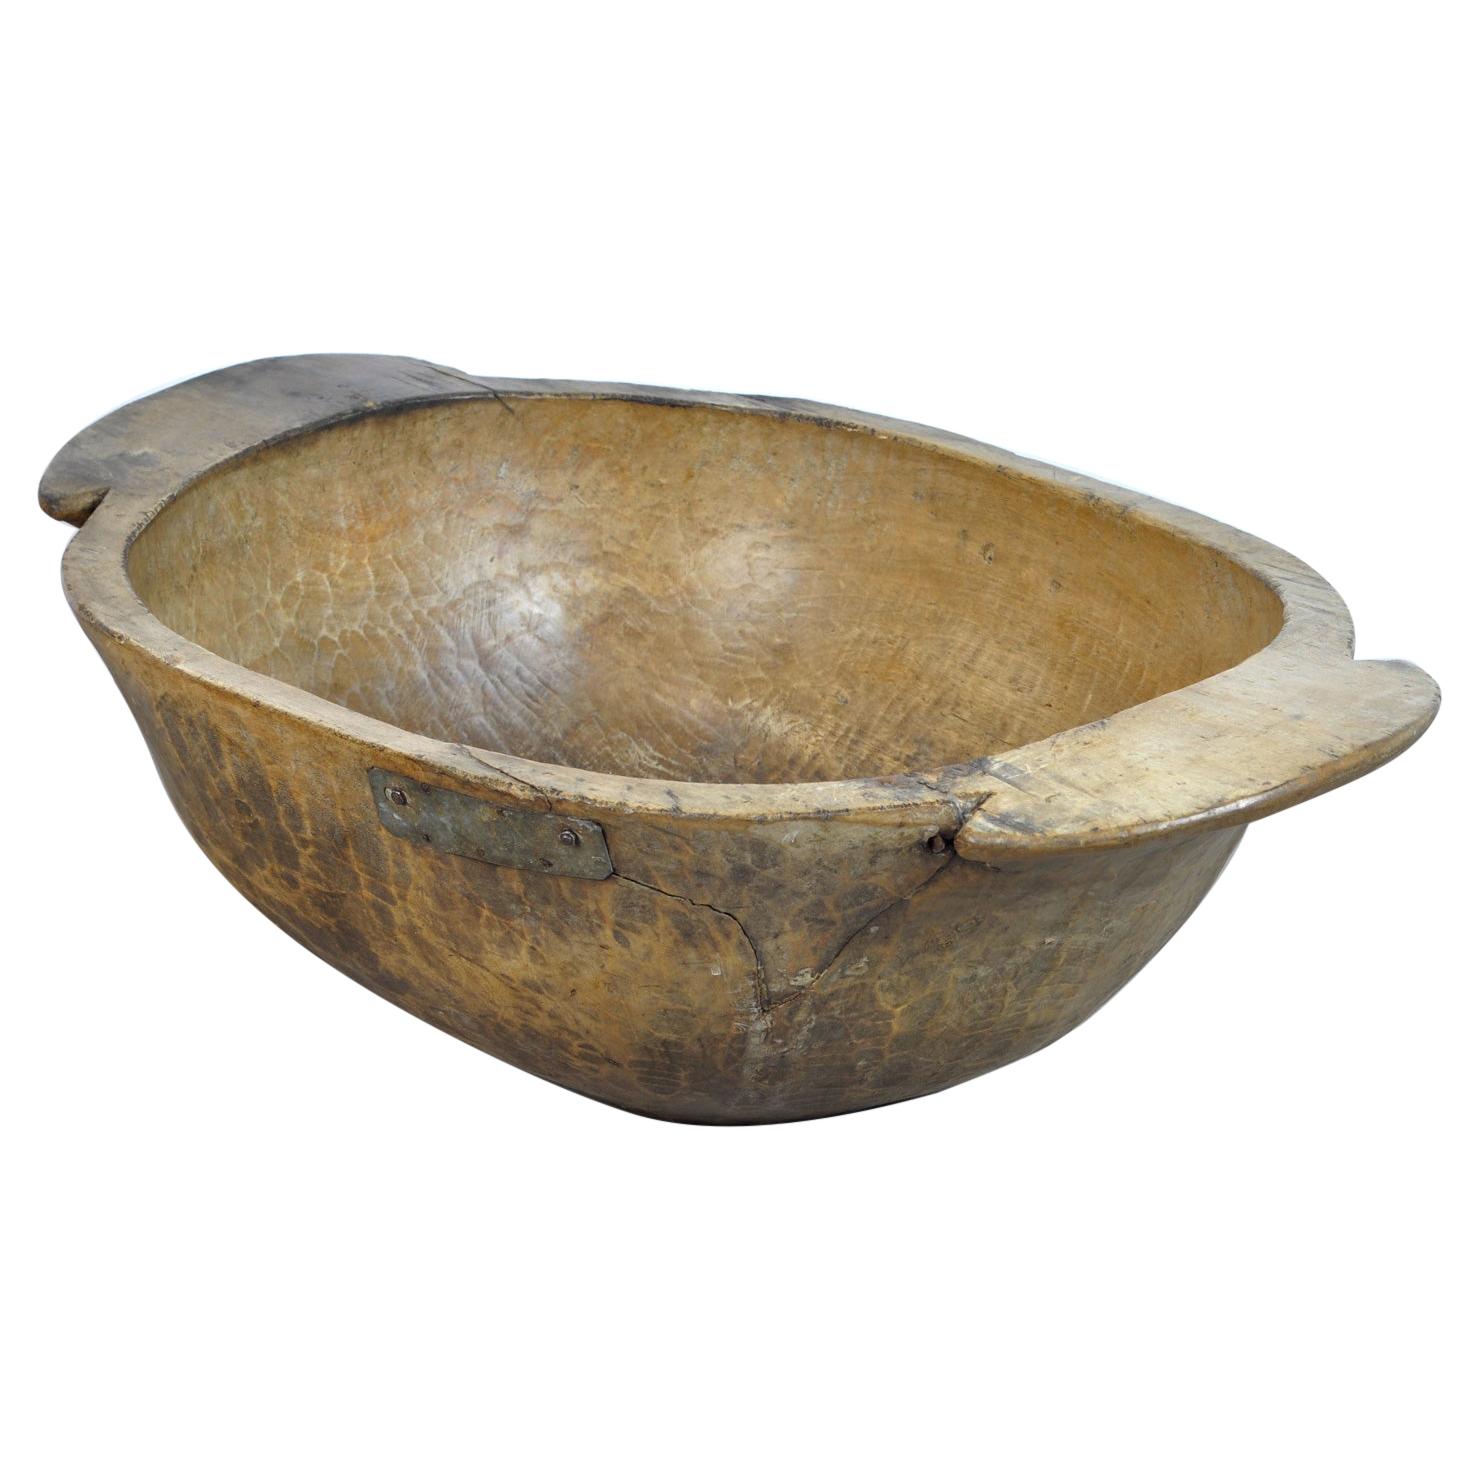 Handmade Hungarian Wooden Dough Bowl, Early 1900s